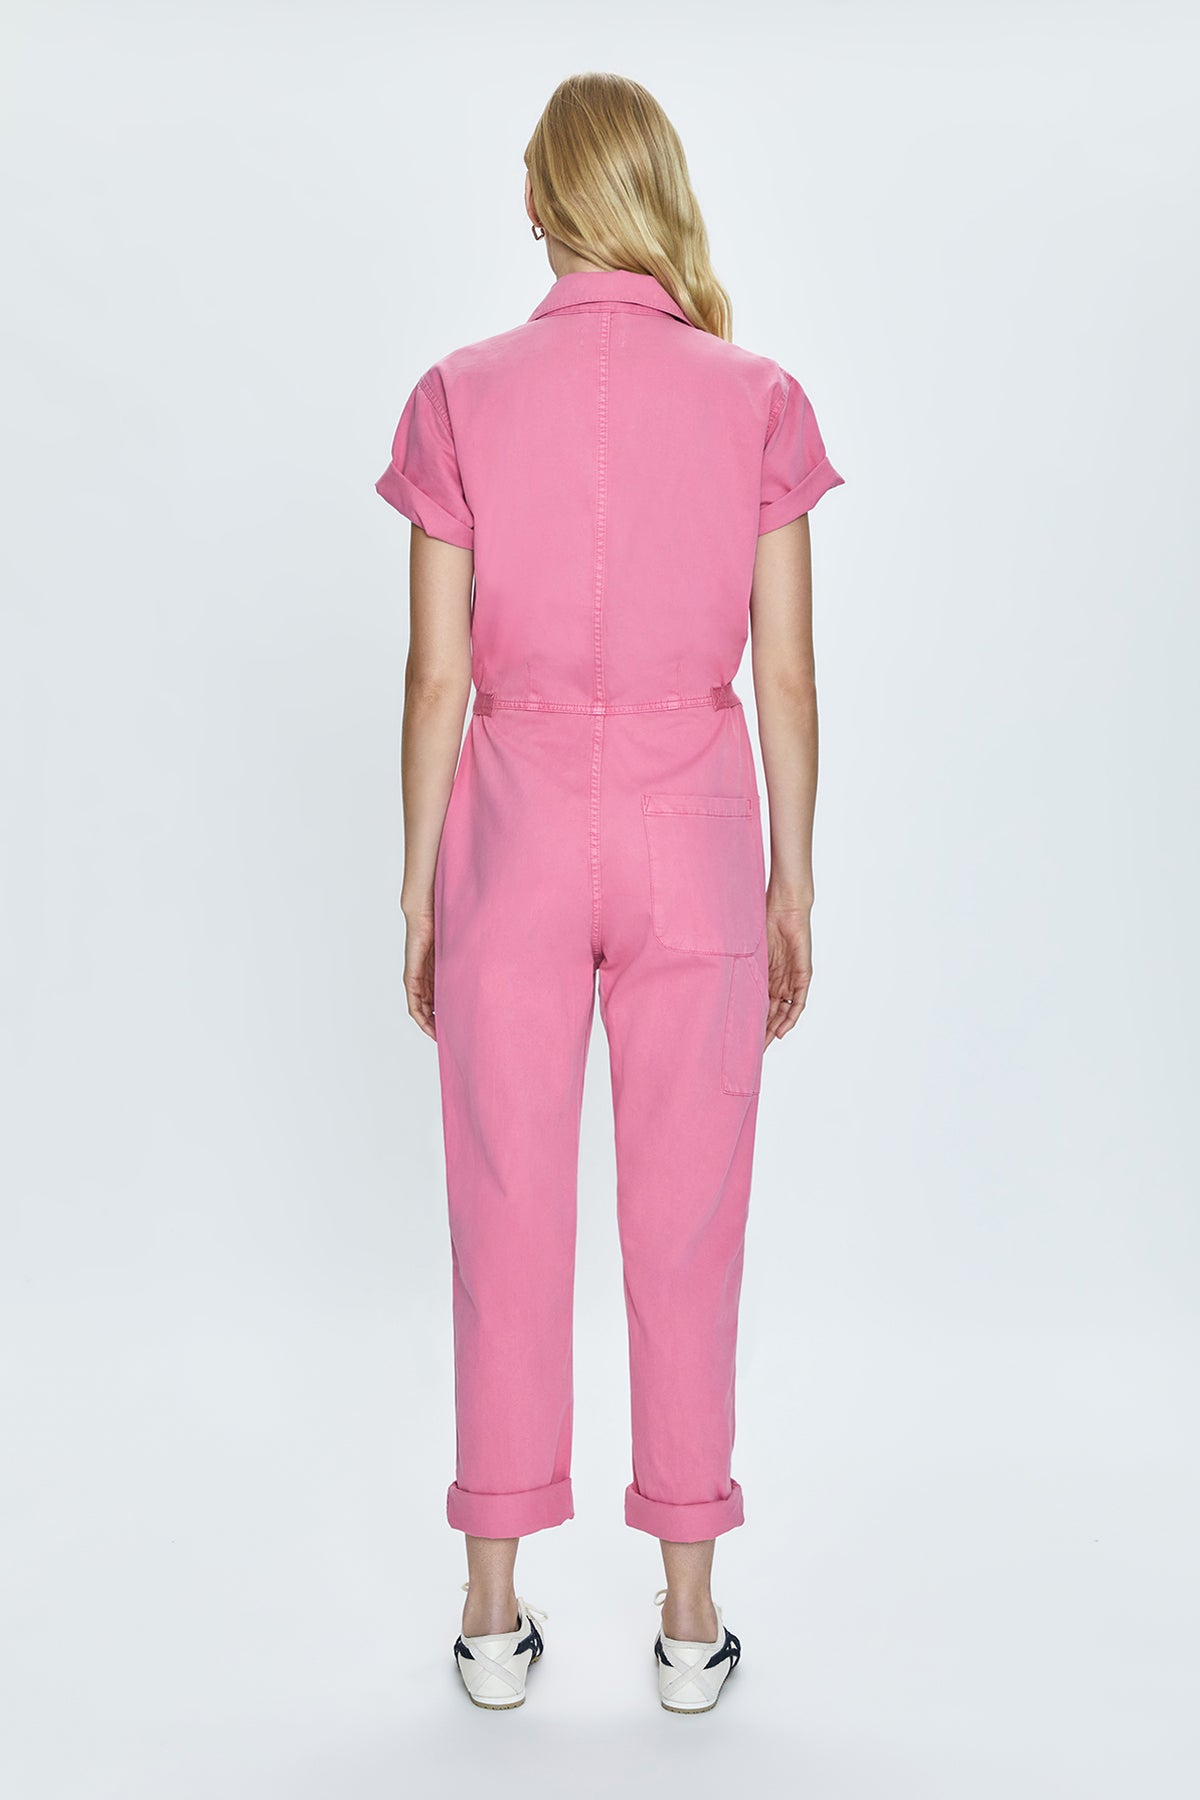 Grover Short Sleeve Field Suit - Flamingo